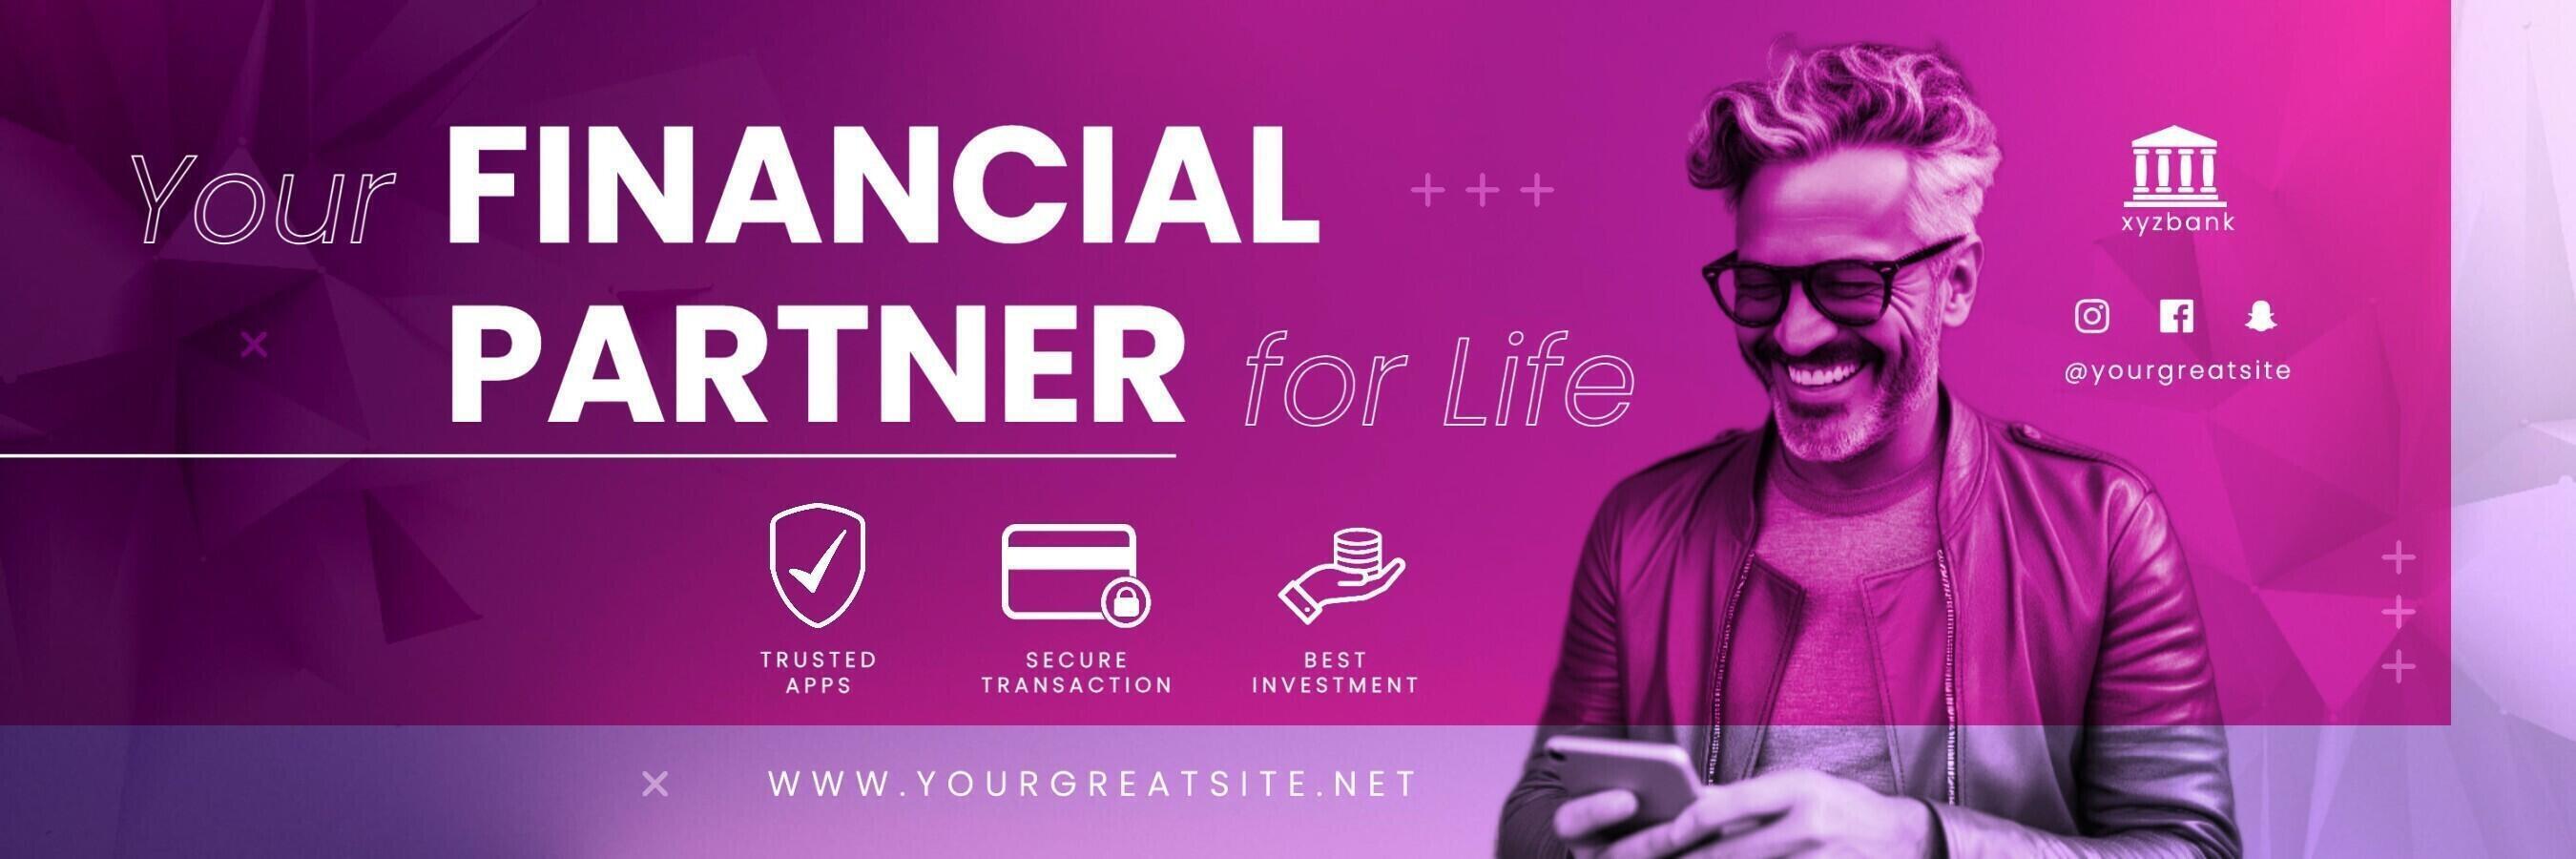 Financial Partner Banking App Template for Twitter Header